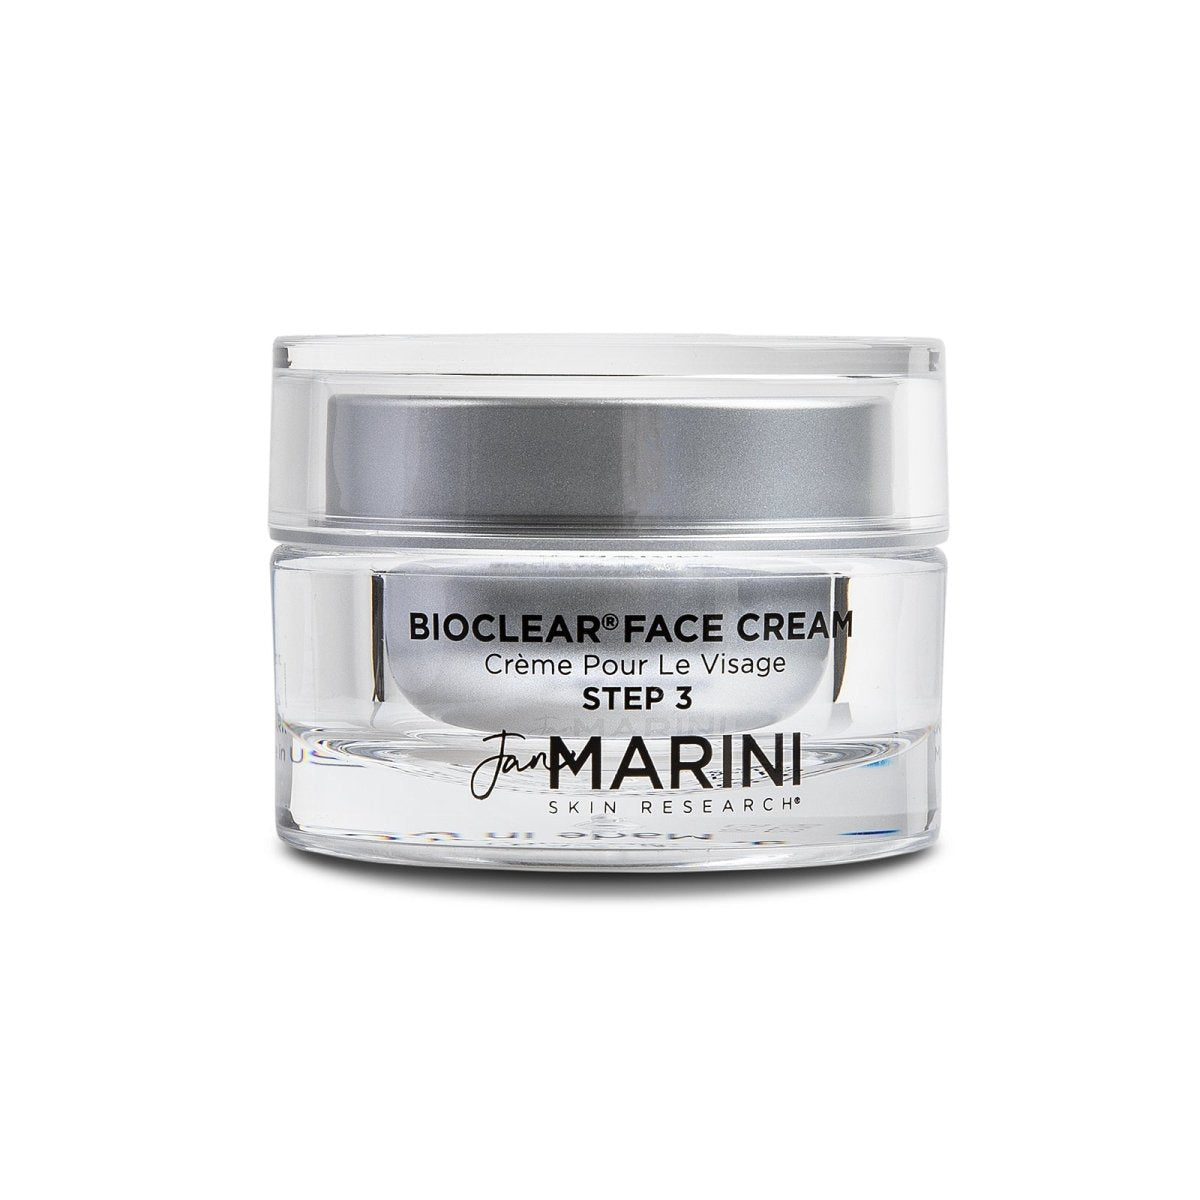 Jan Marini Bioclear® Face Cream - SkincareEssentials